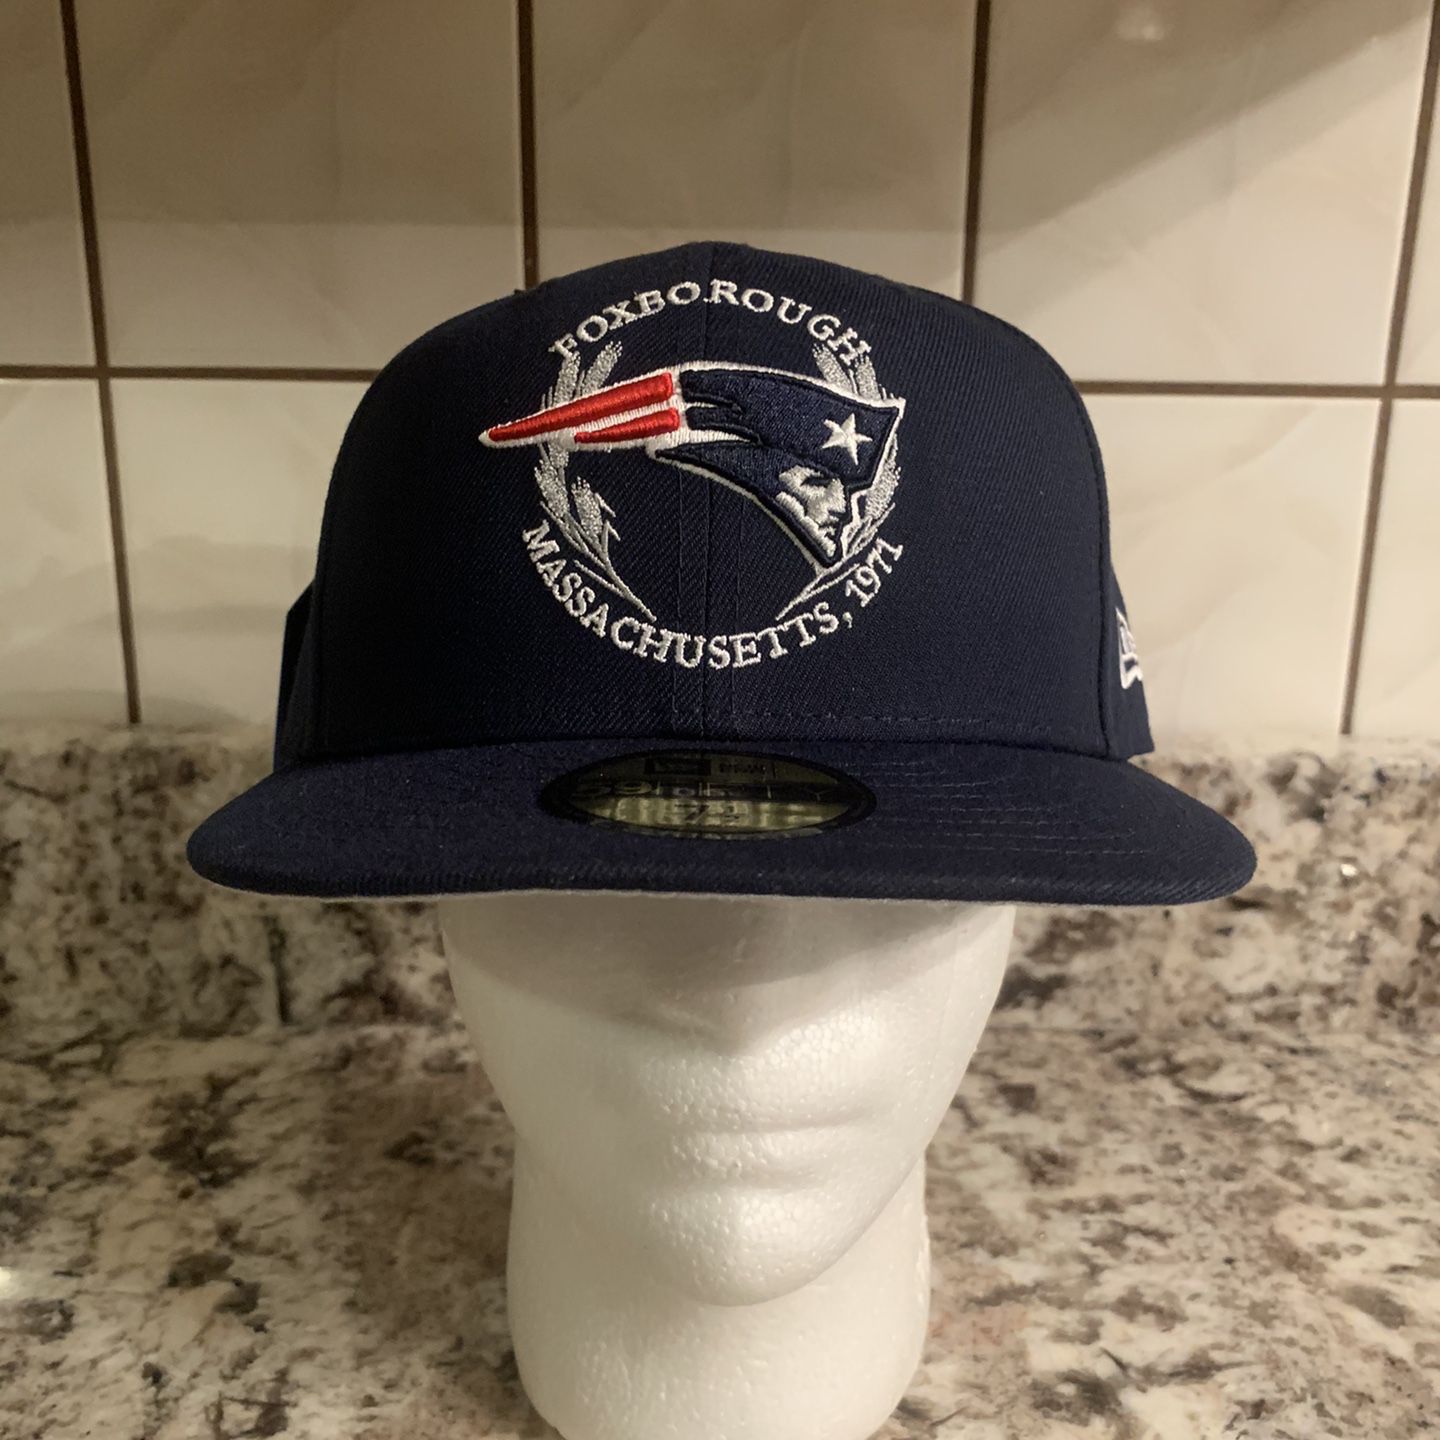 New England Patriots 2019 NFL Draft NEW ERA 59FIFTY - Sz. 7 1/2